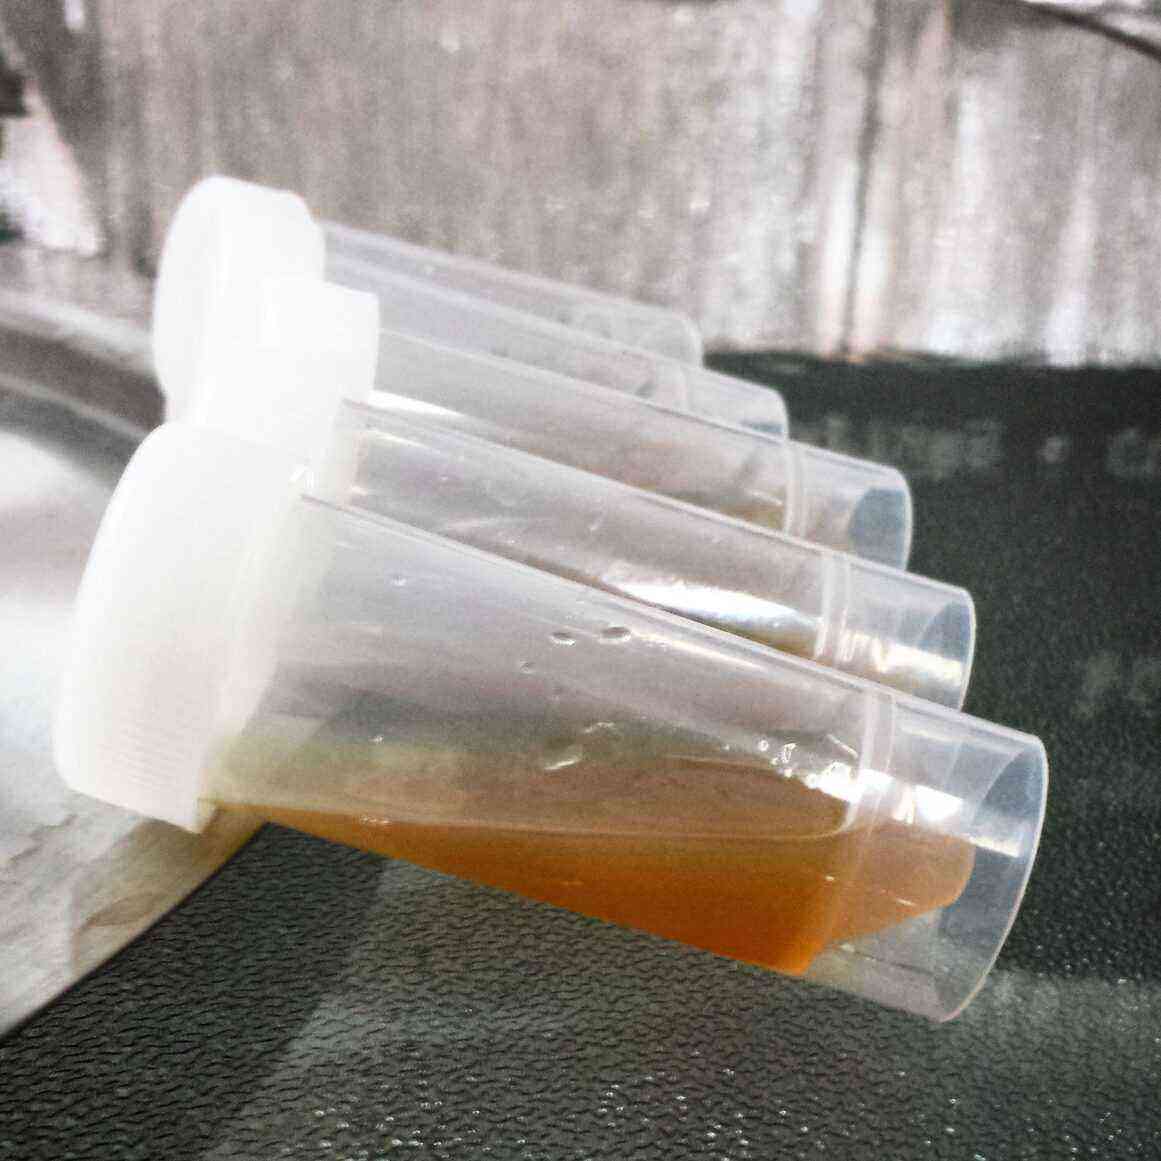 Preparation of liquid yeast